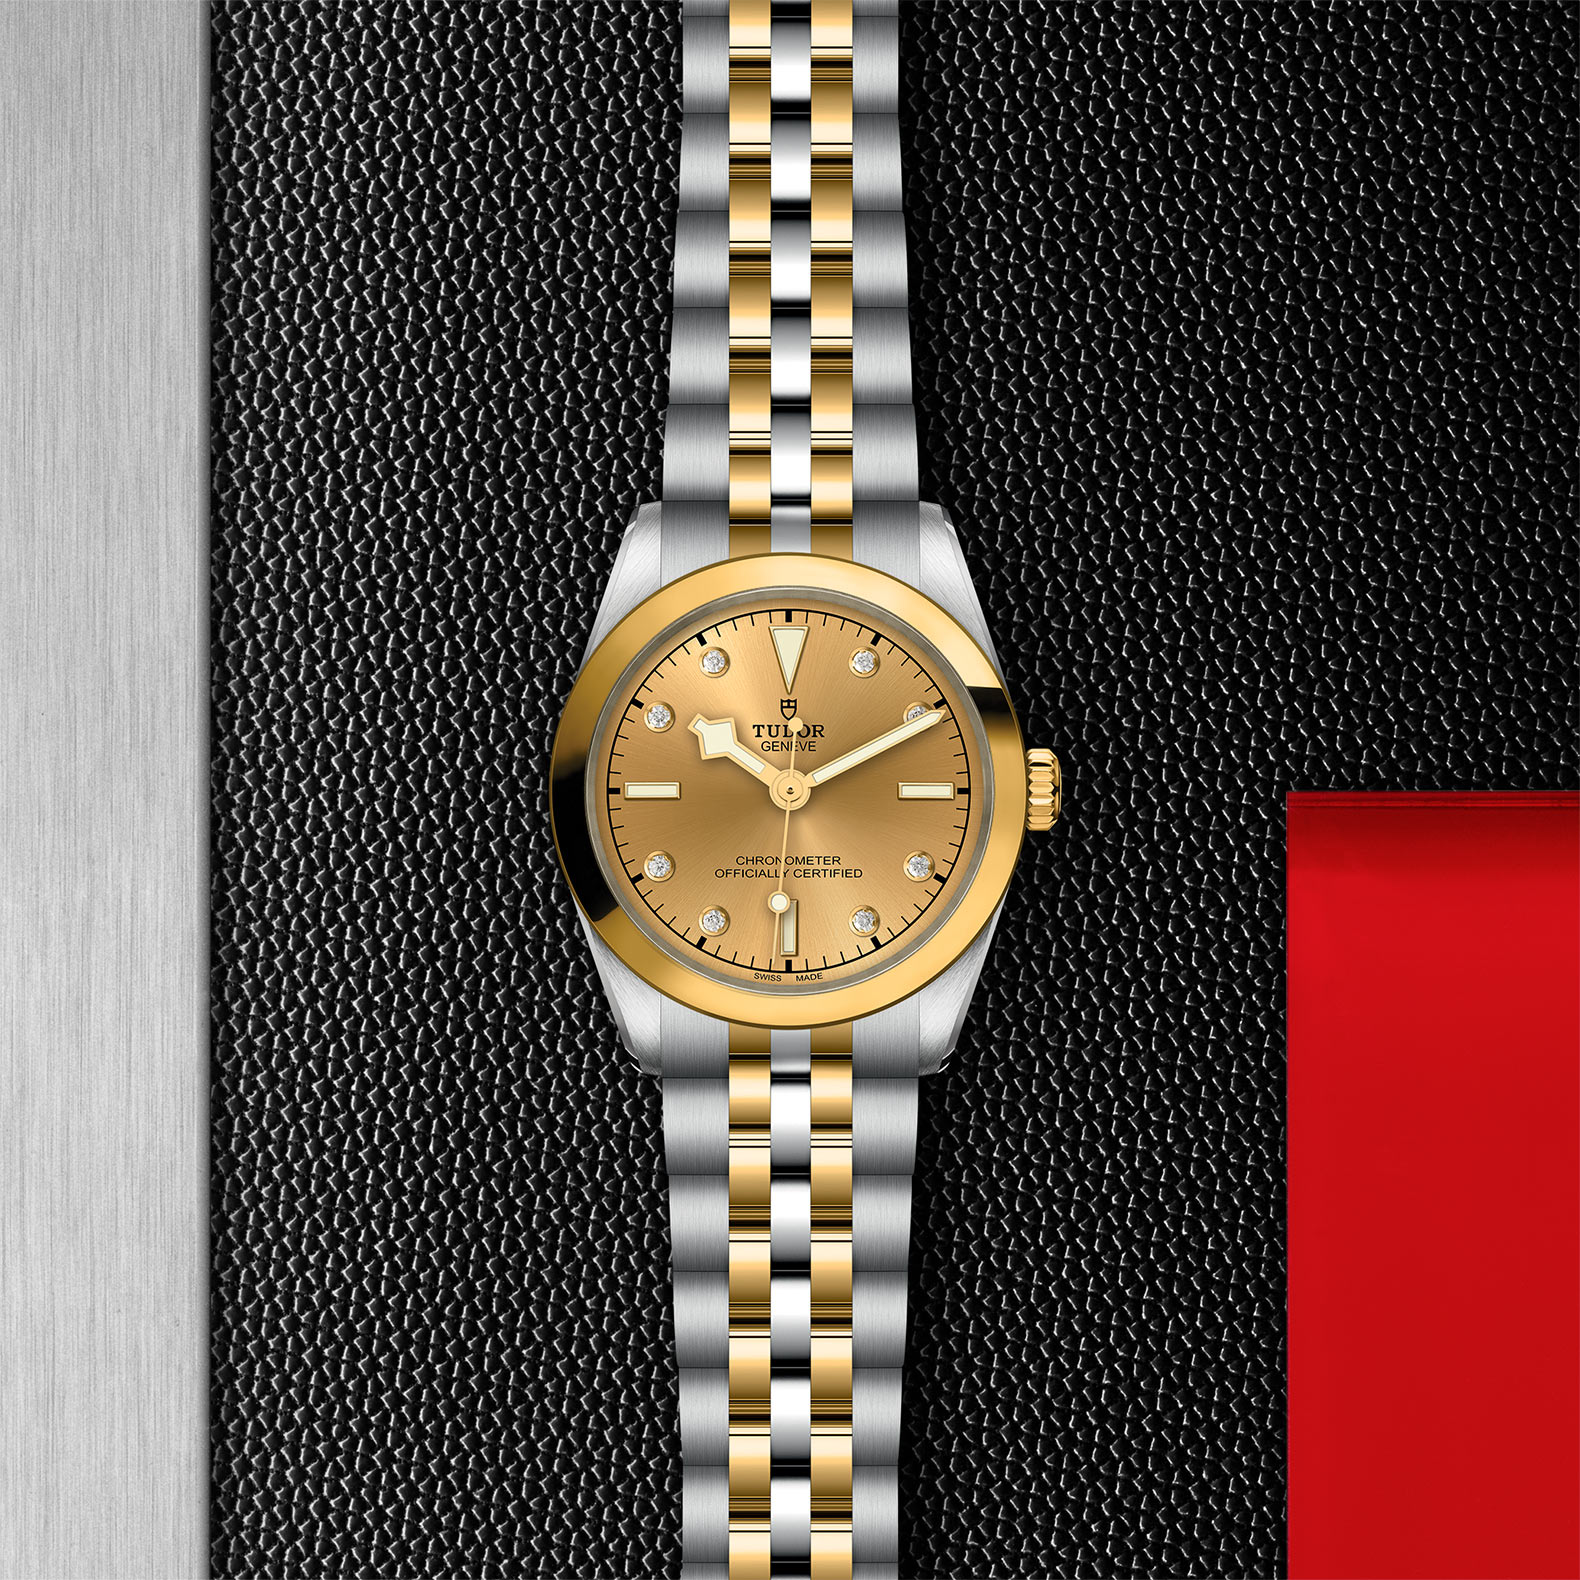 Tudor Watch Assets M79603 0008 Instore Flatlay